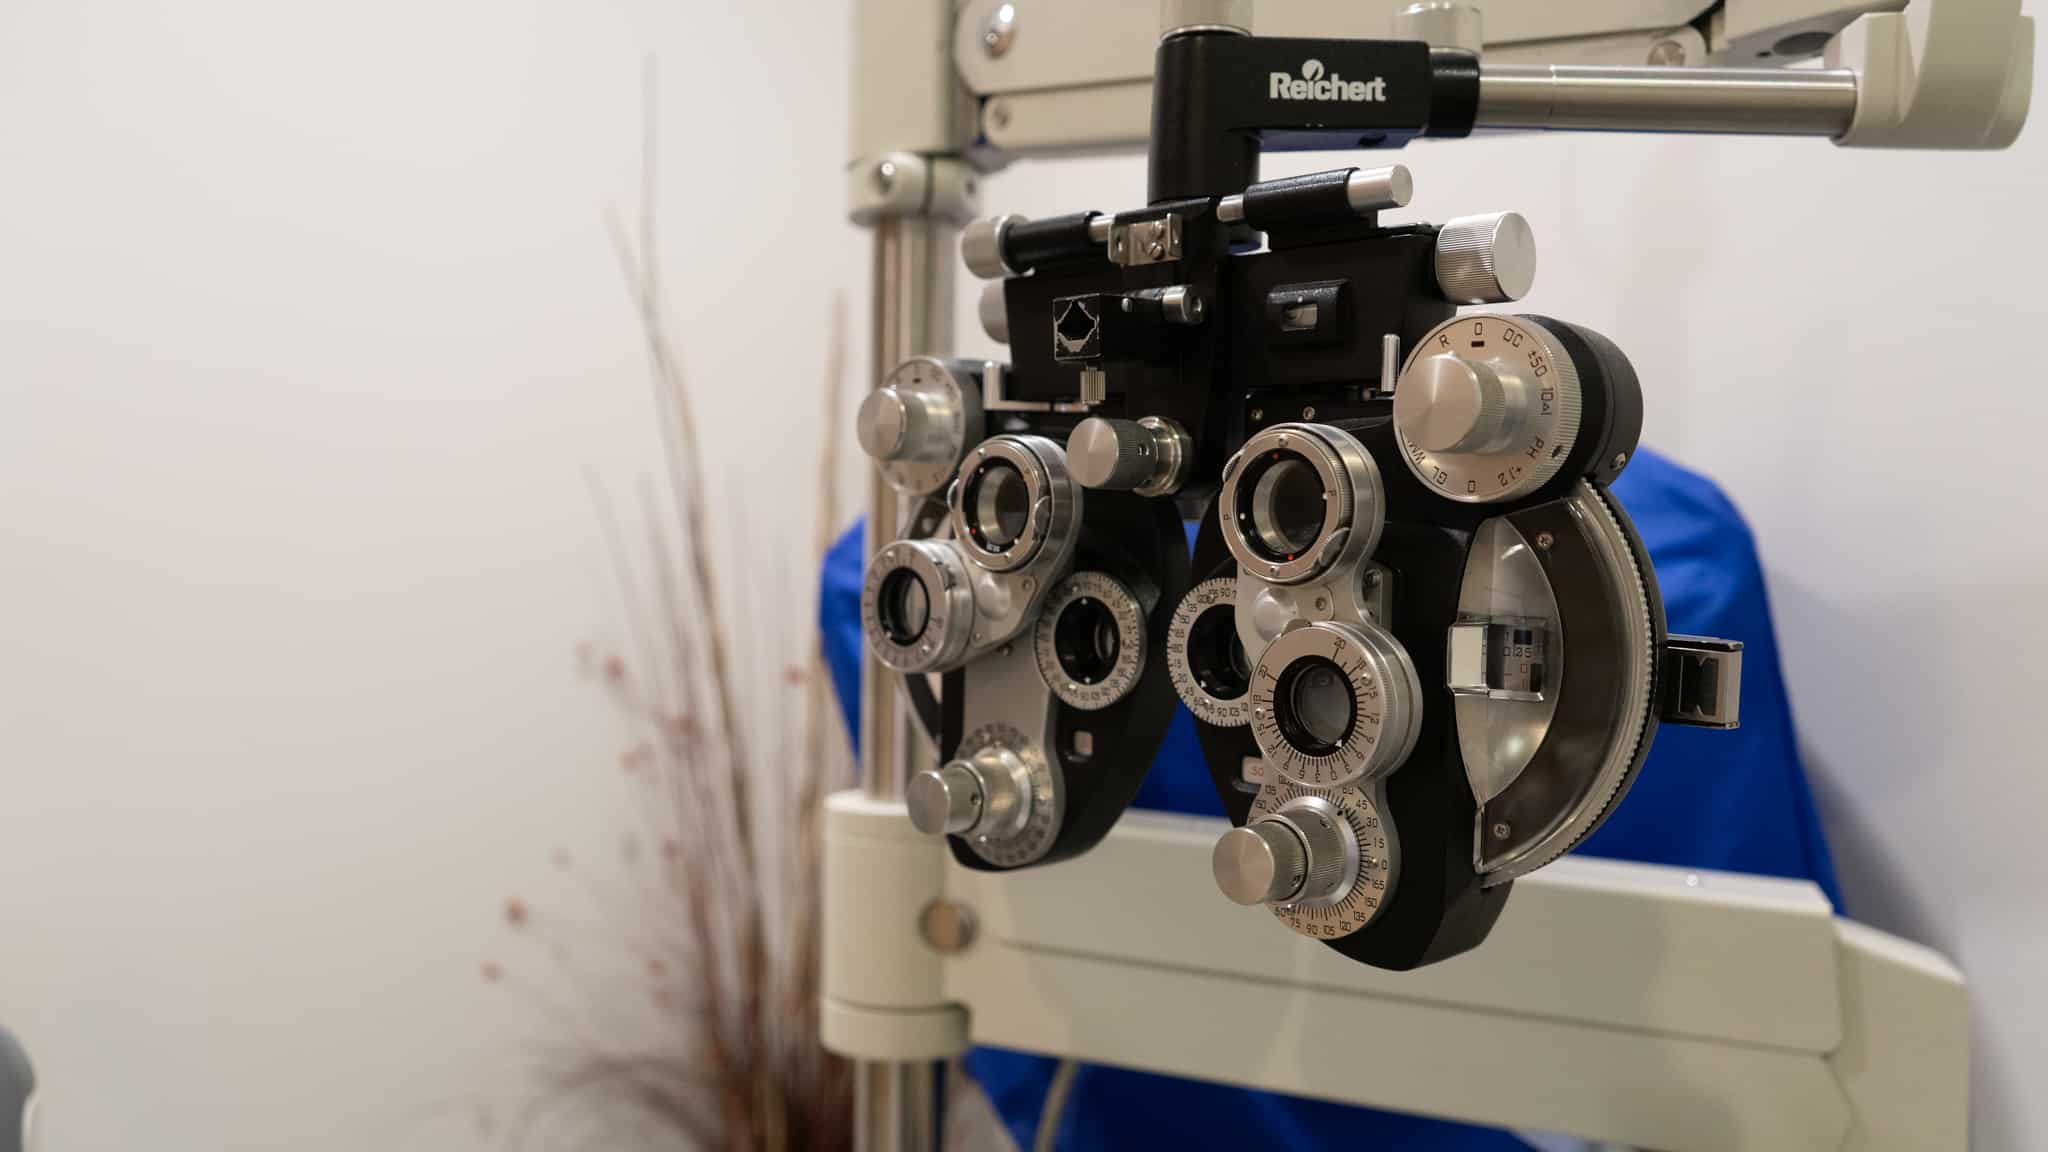 An eye exam room at Standard Optical in Salt Lake City.